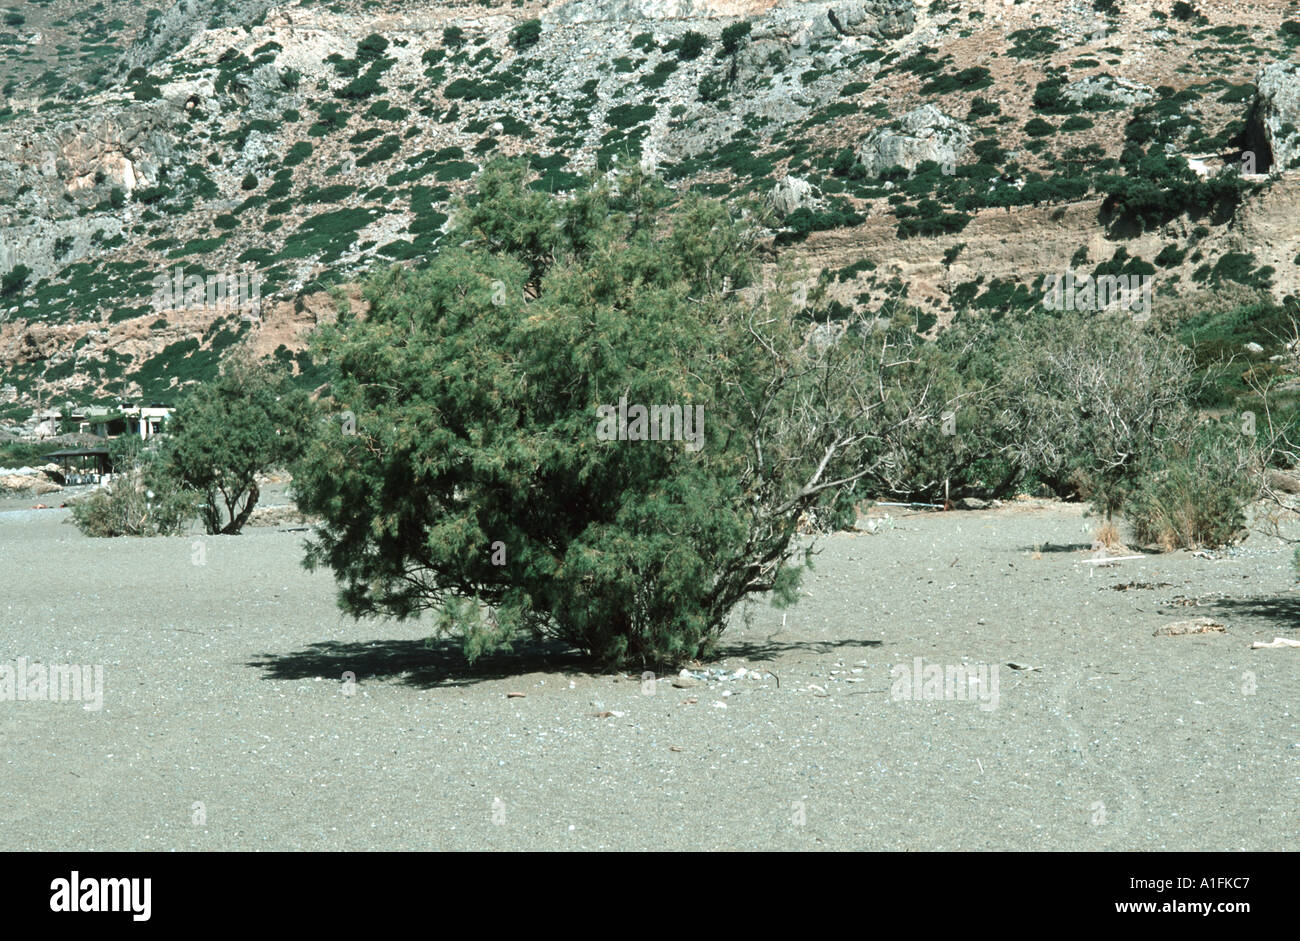 A tamarisk tree Tamarix boveana on a beach in Crete Stock Photo